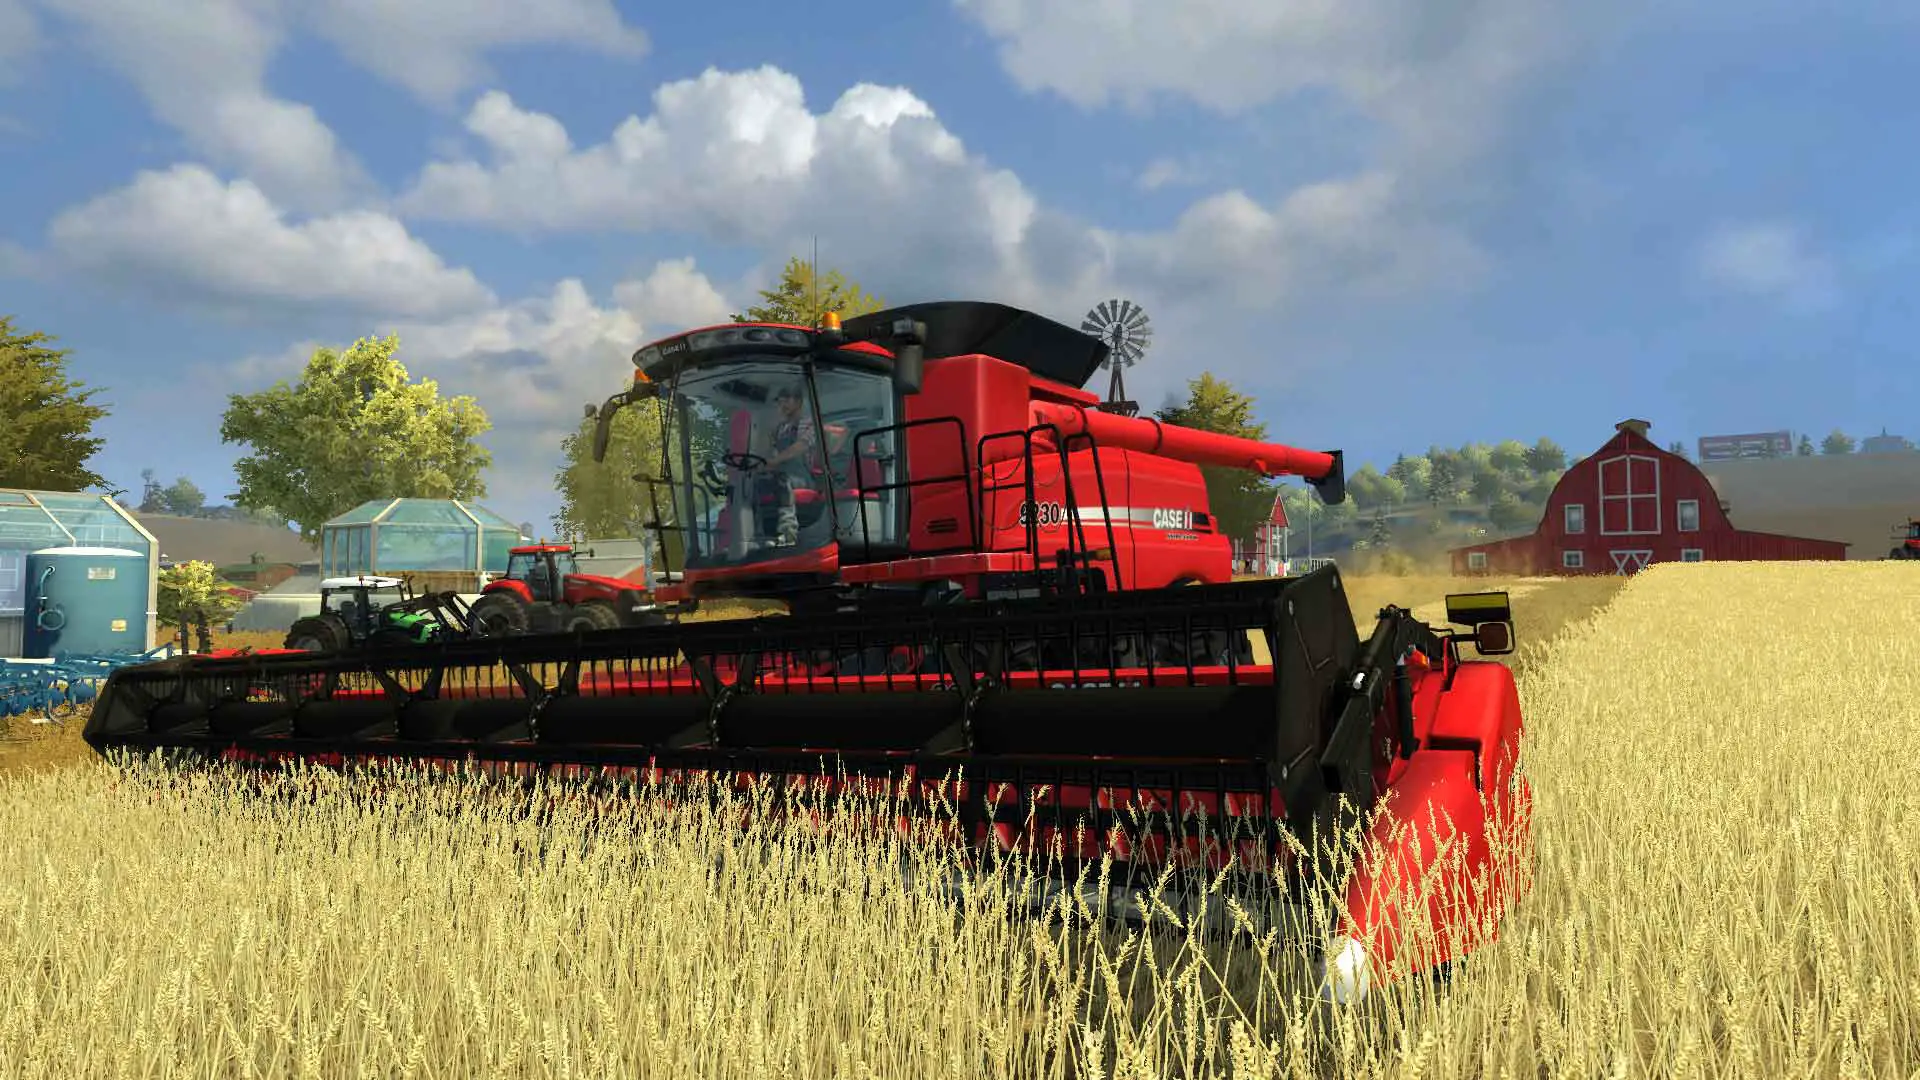 free download farming simulator 2013 ps4